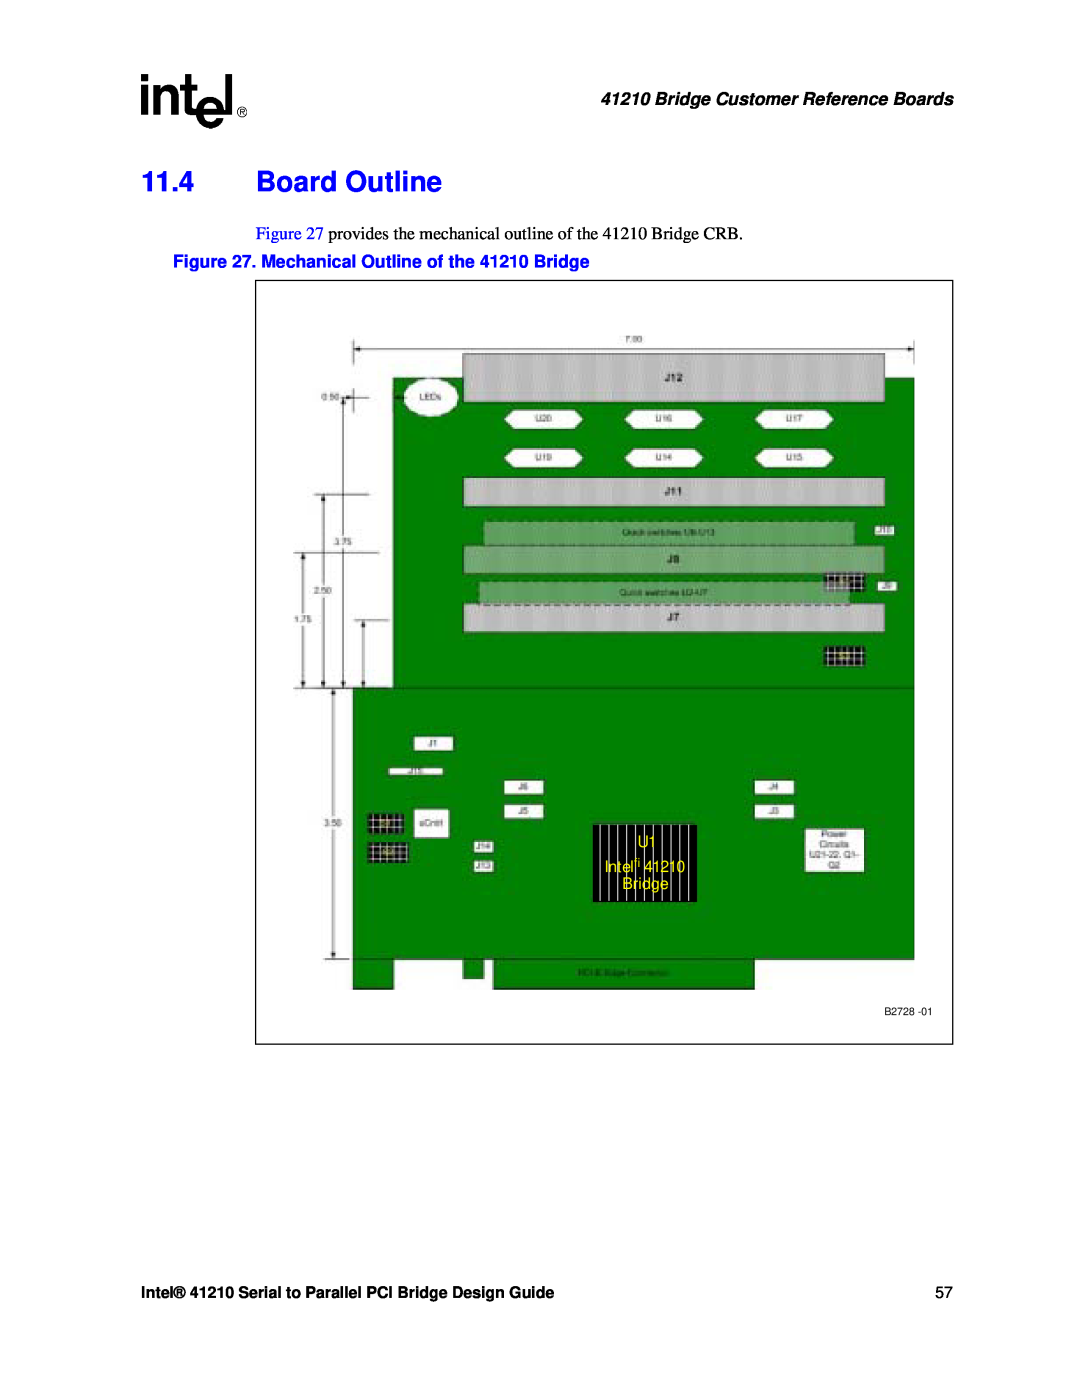 Intel Board Outline, Mechanical Outline of the 41210 Bridge, Bridge Customer Reference Boards, U1 Intelﬁ Bridge, B2728 